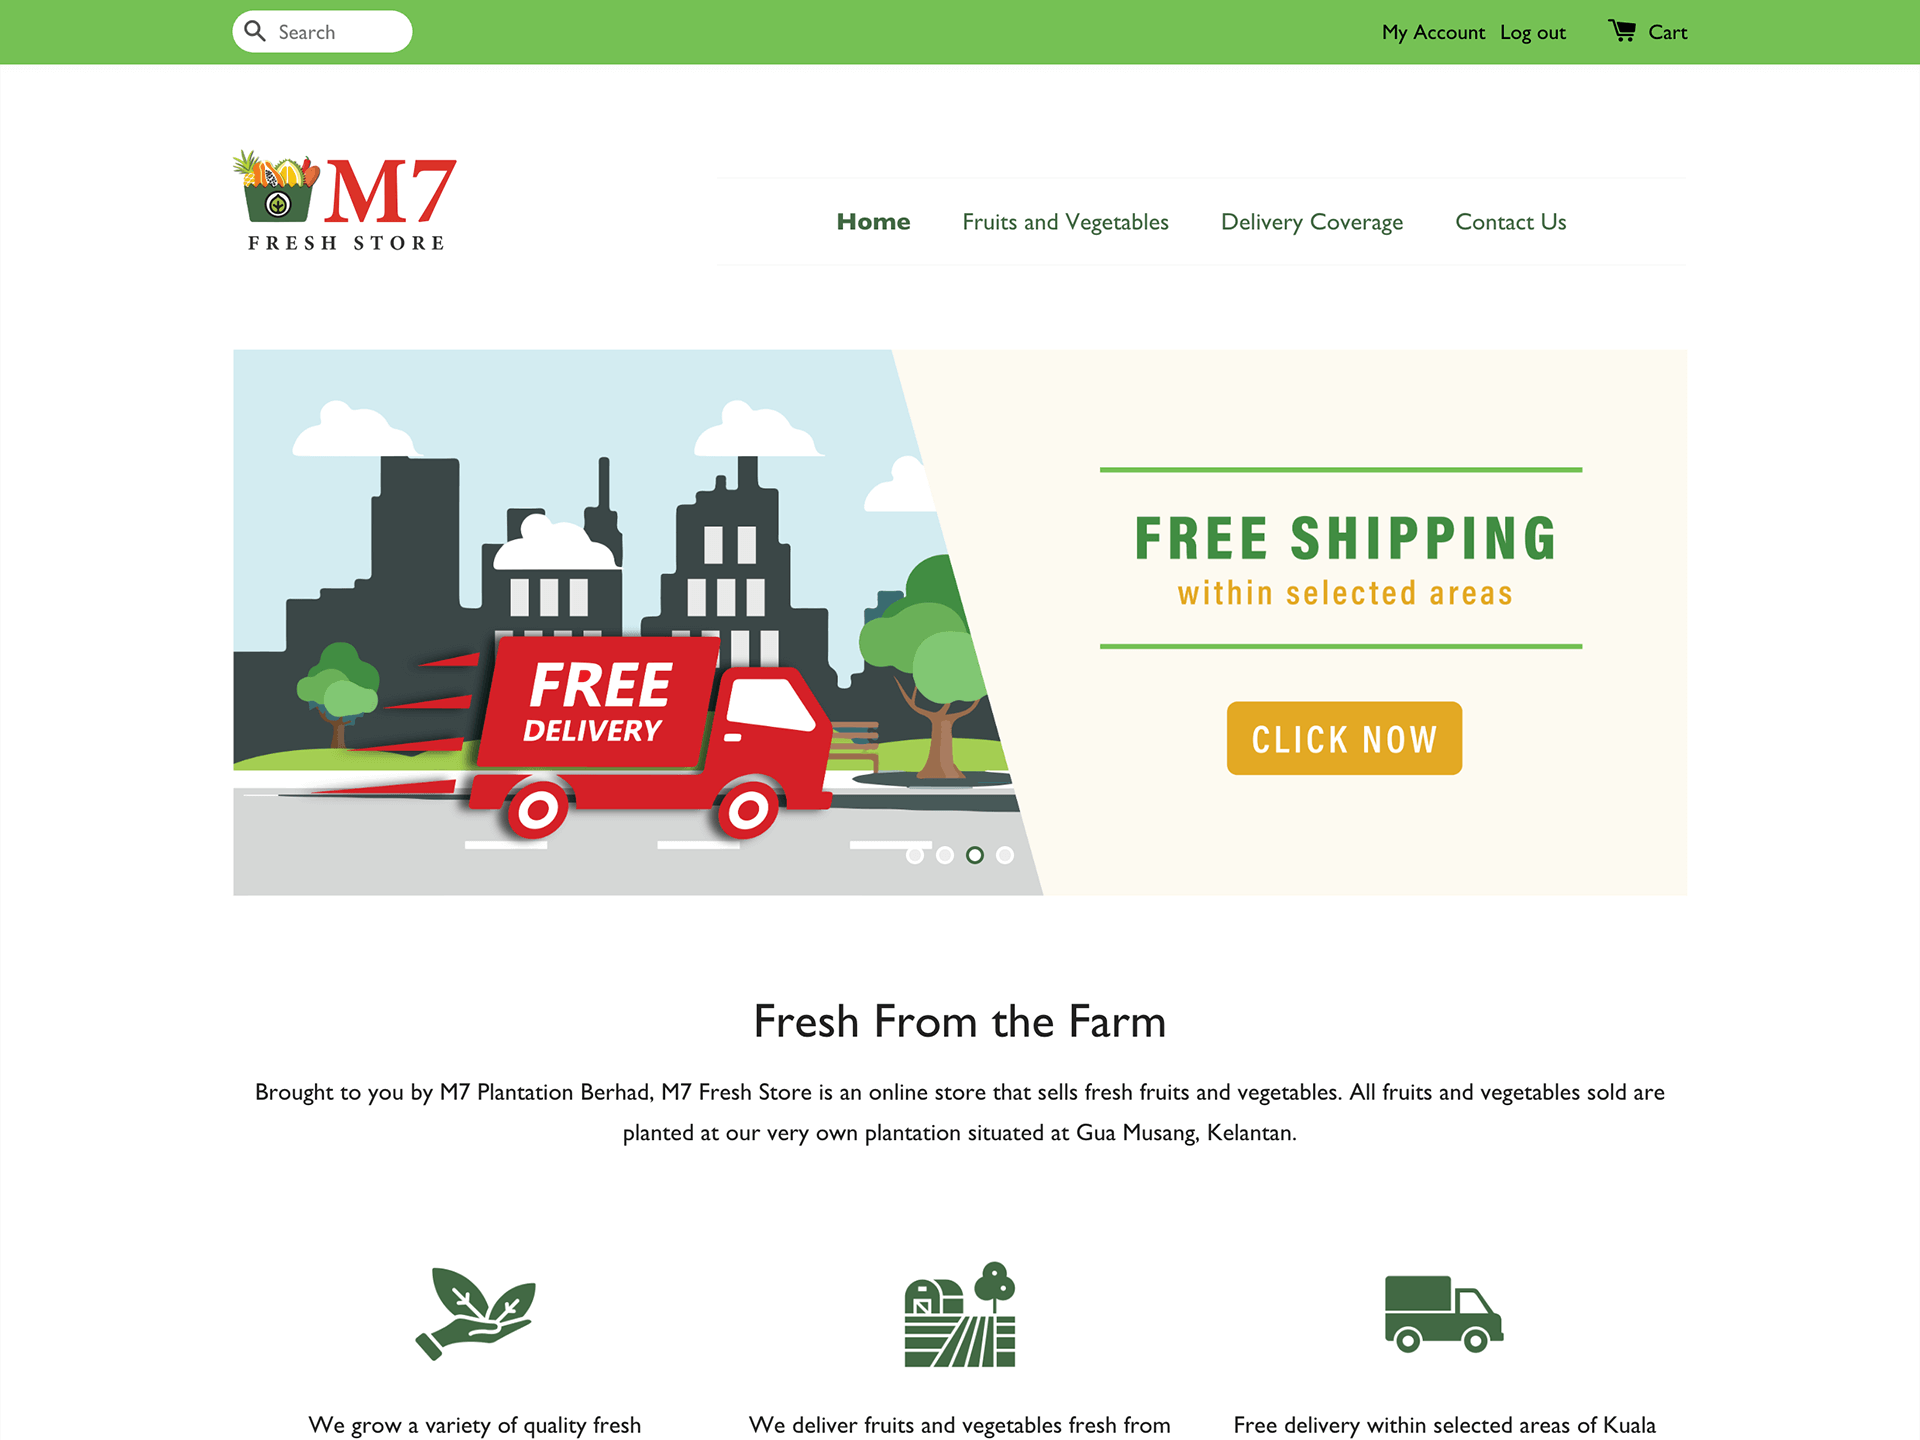 M7 Fresh Store website